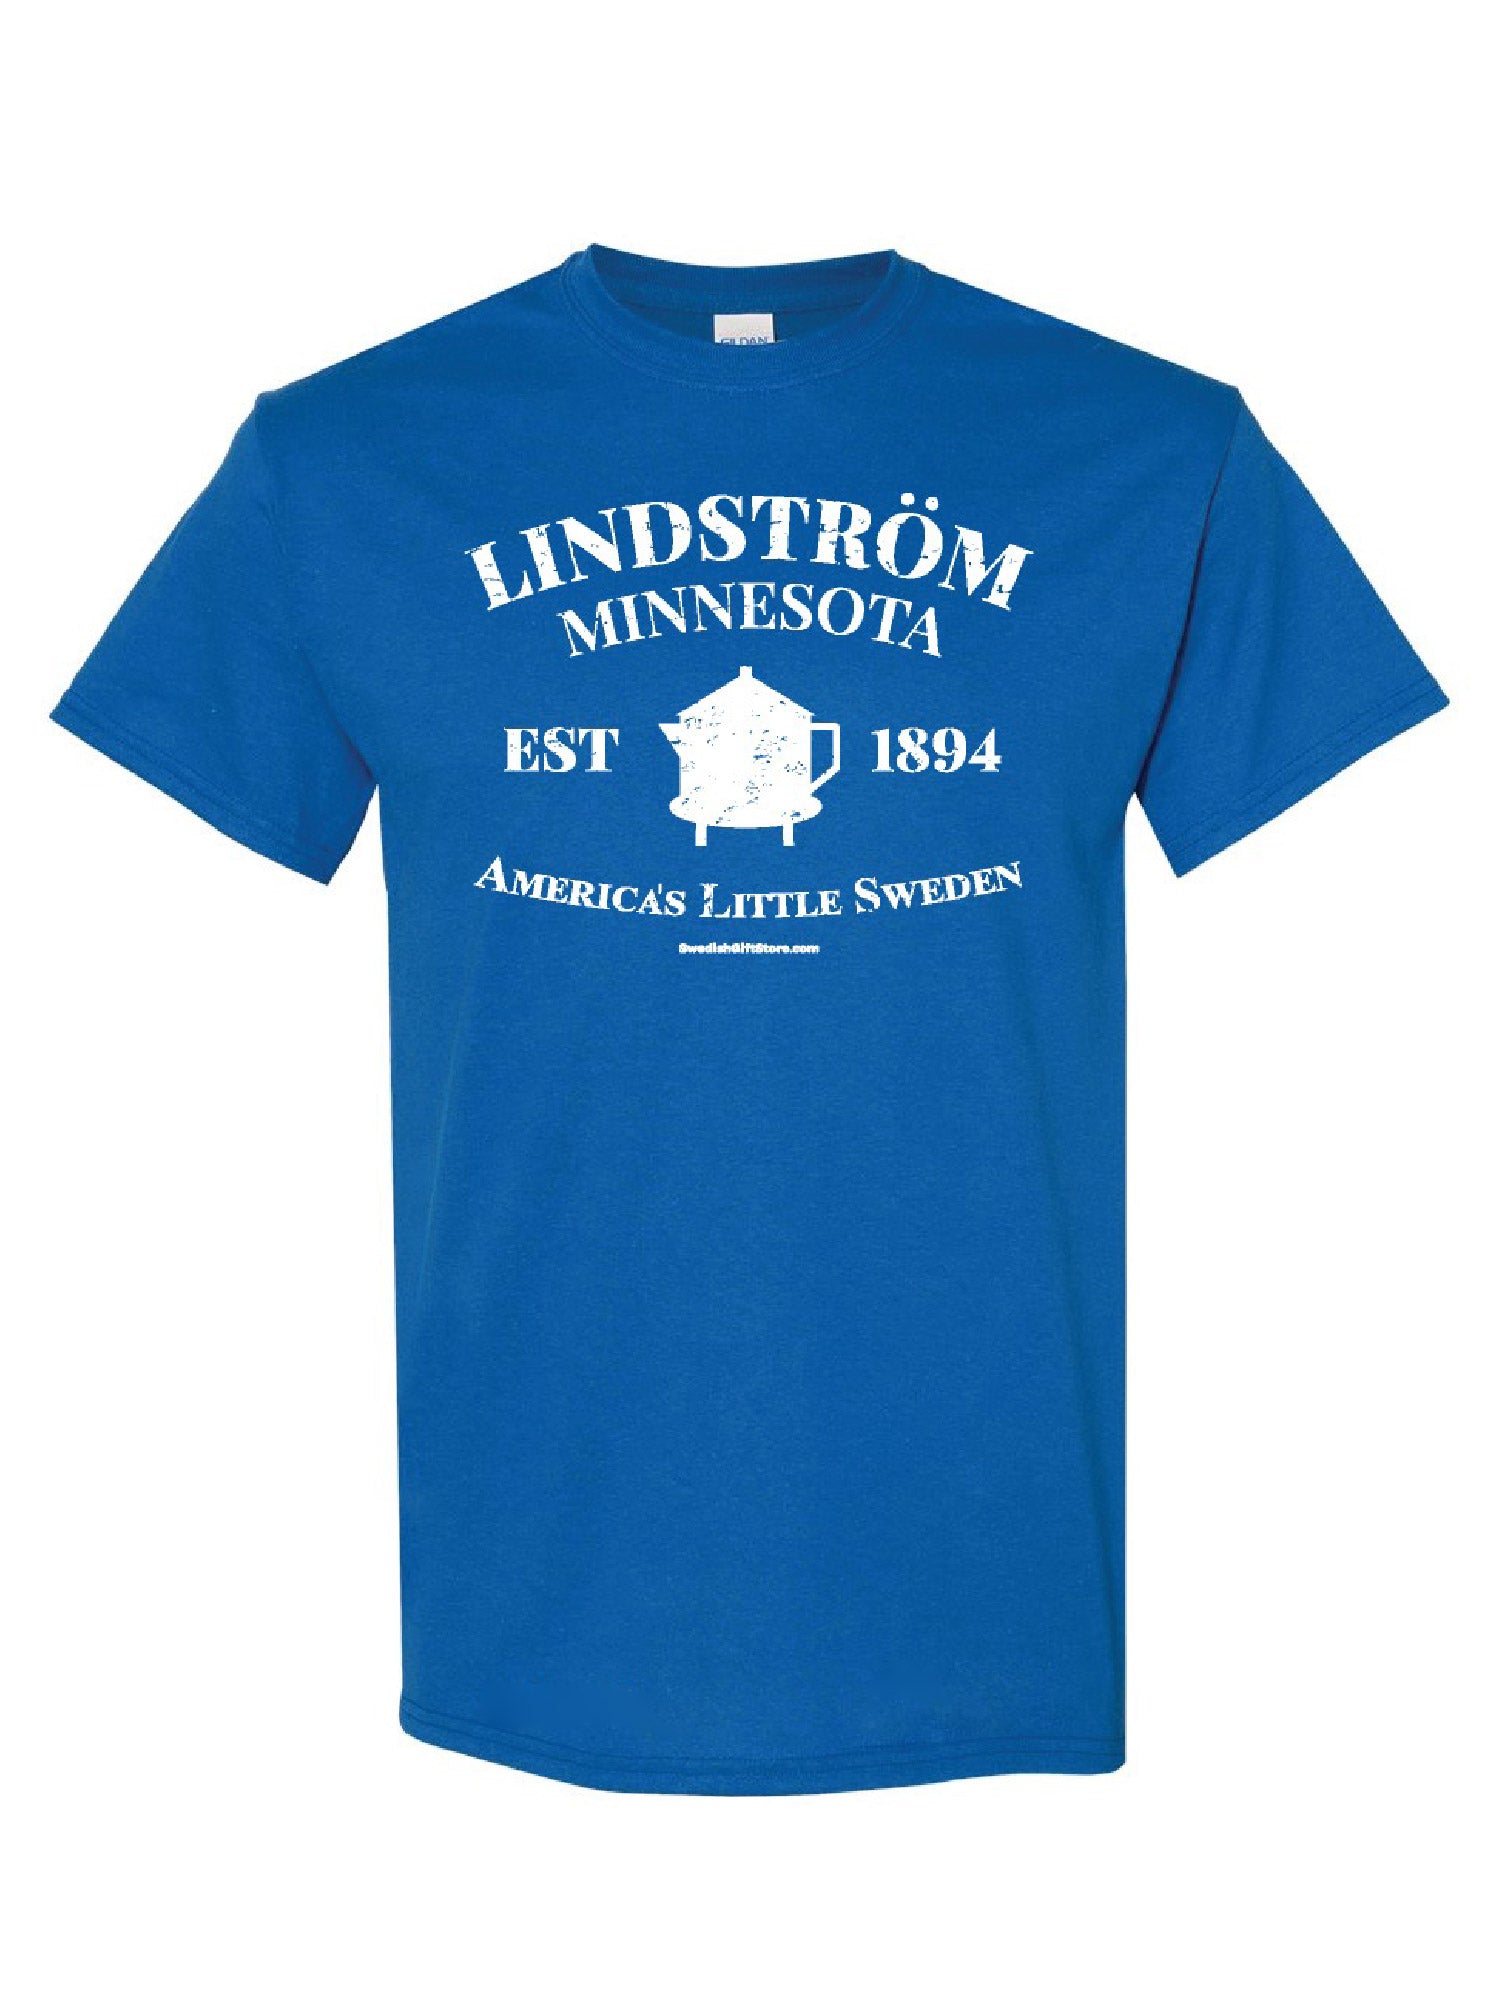 Tee: Lindstrom EST 1894